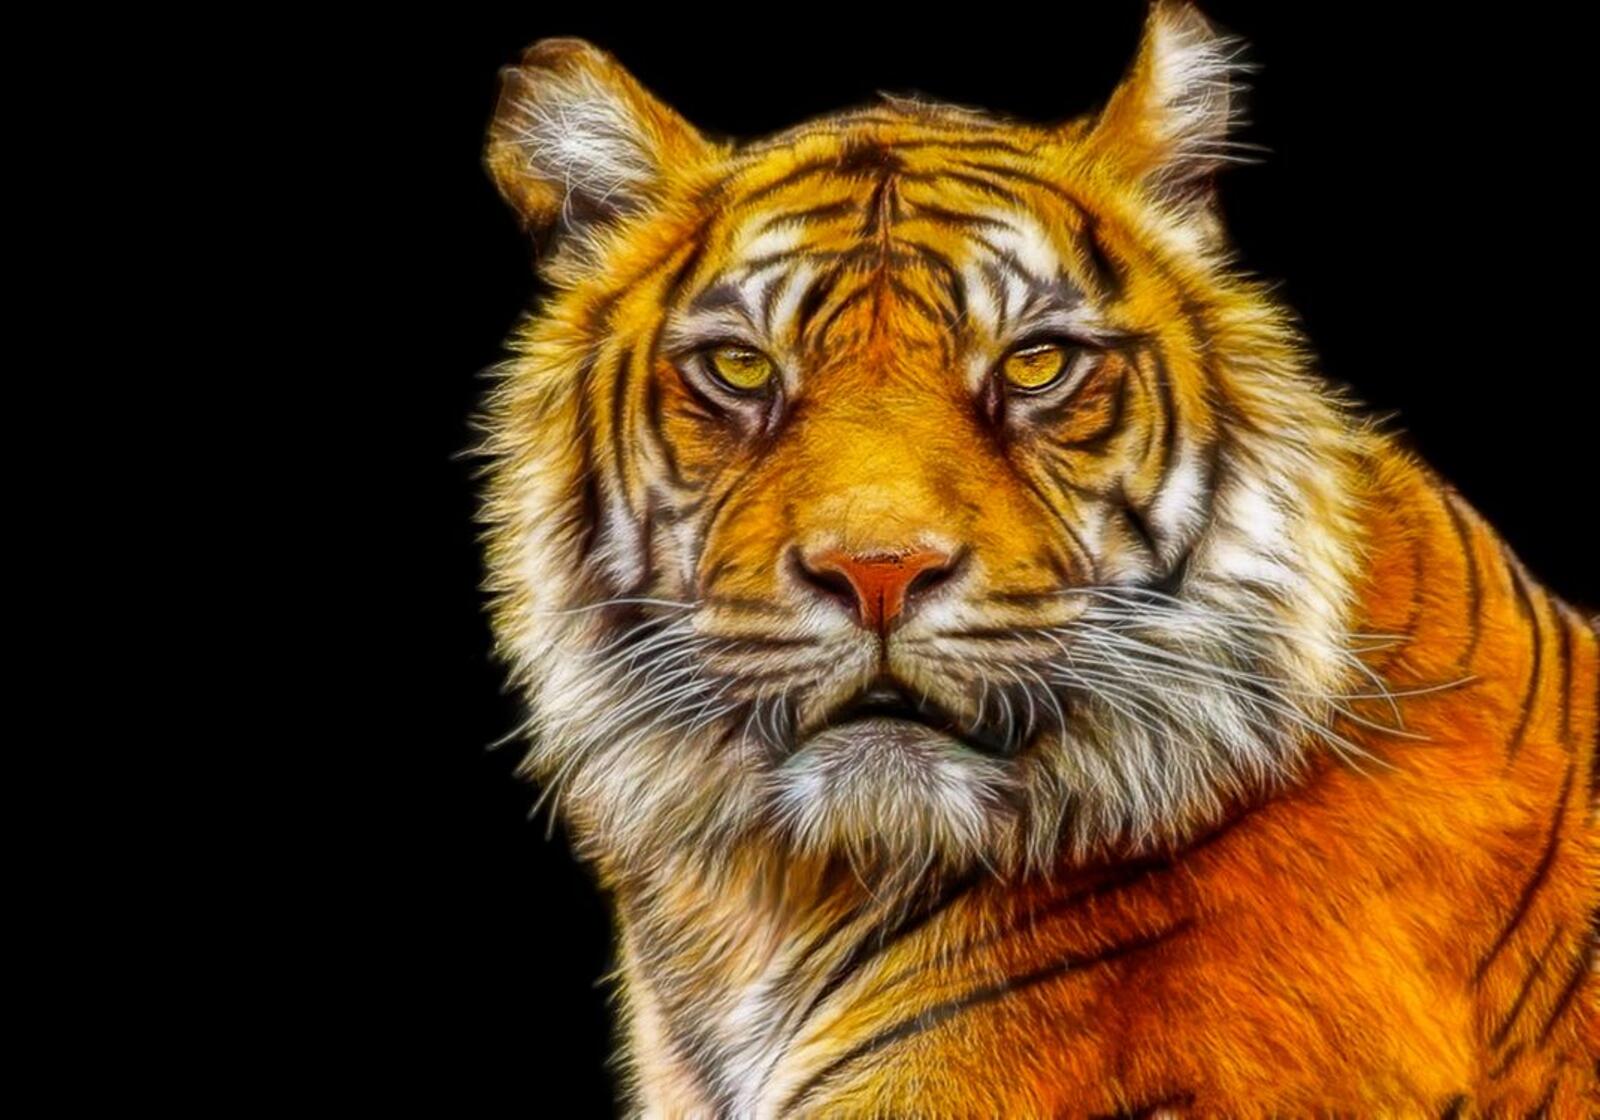 Wallpapers photo tiger predator on the desktop